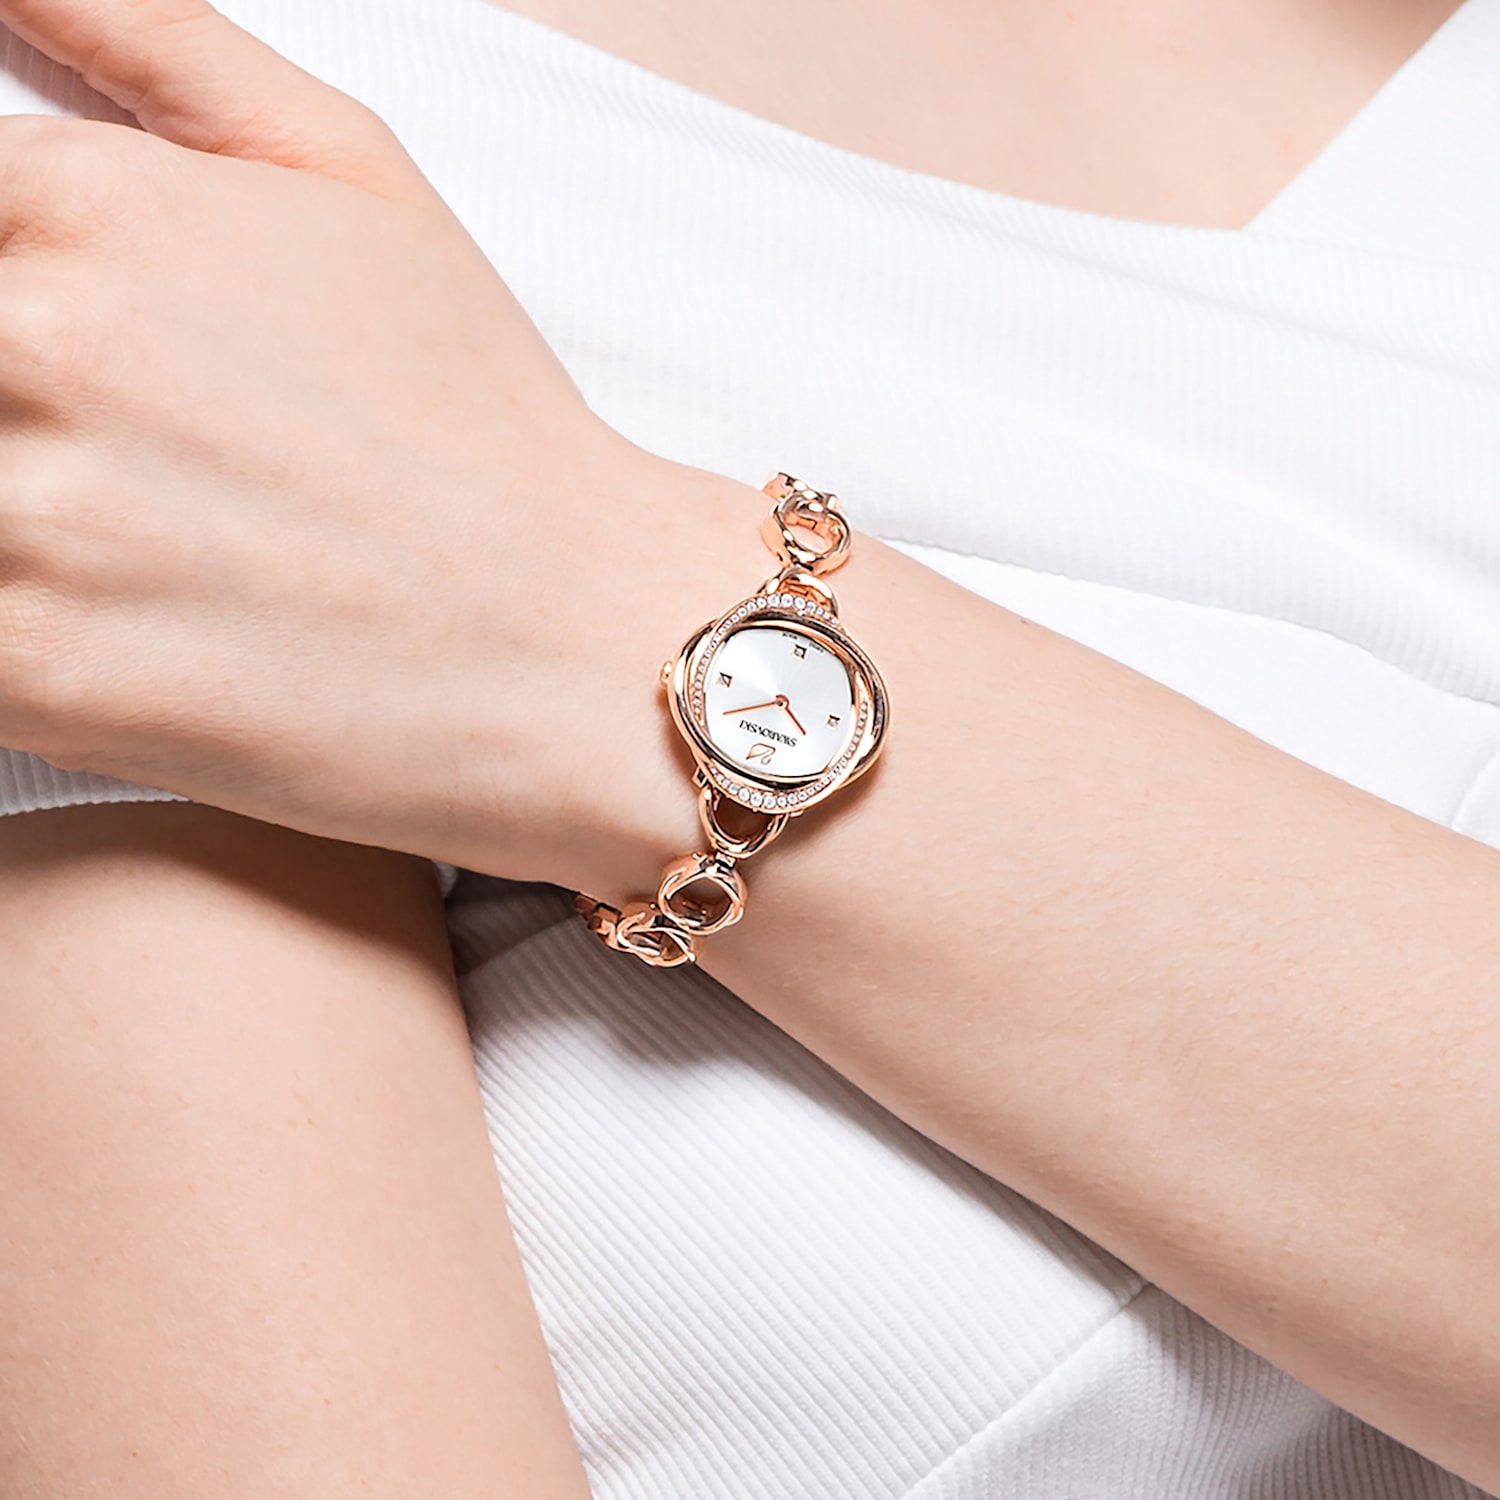 Crystal Flower watch, Metal bracelet, Rose gold-tone, Rose gold-tone finish